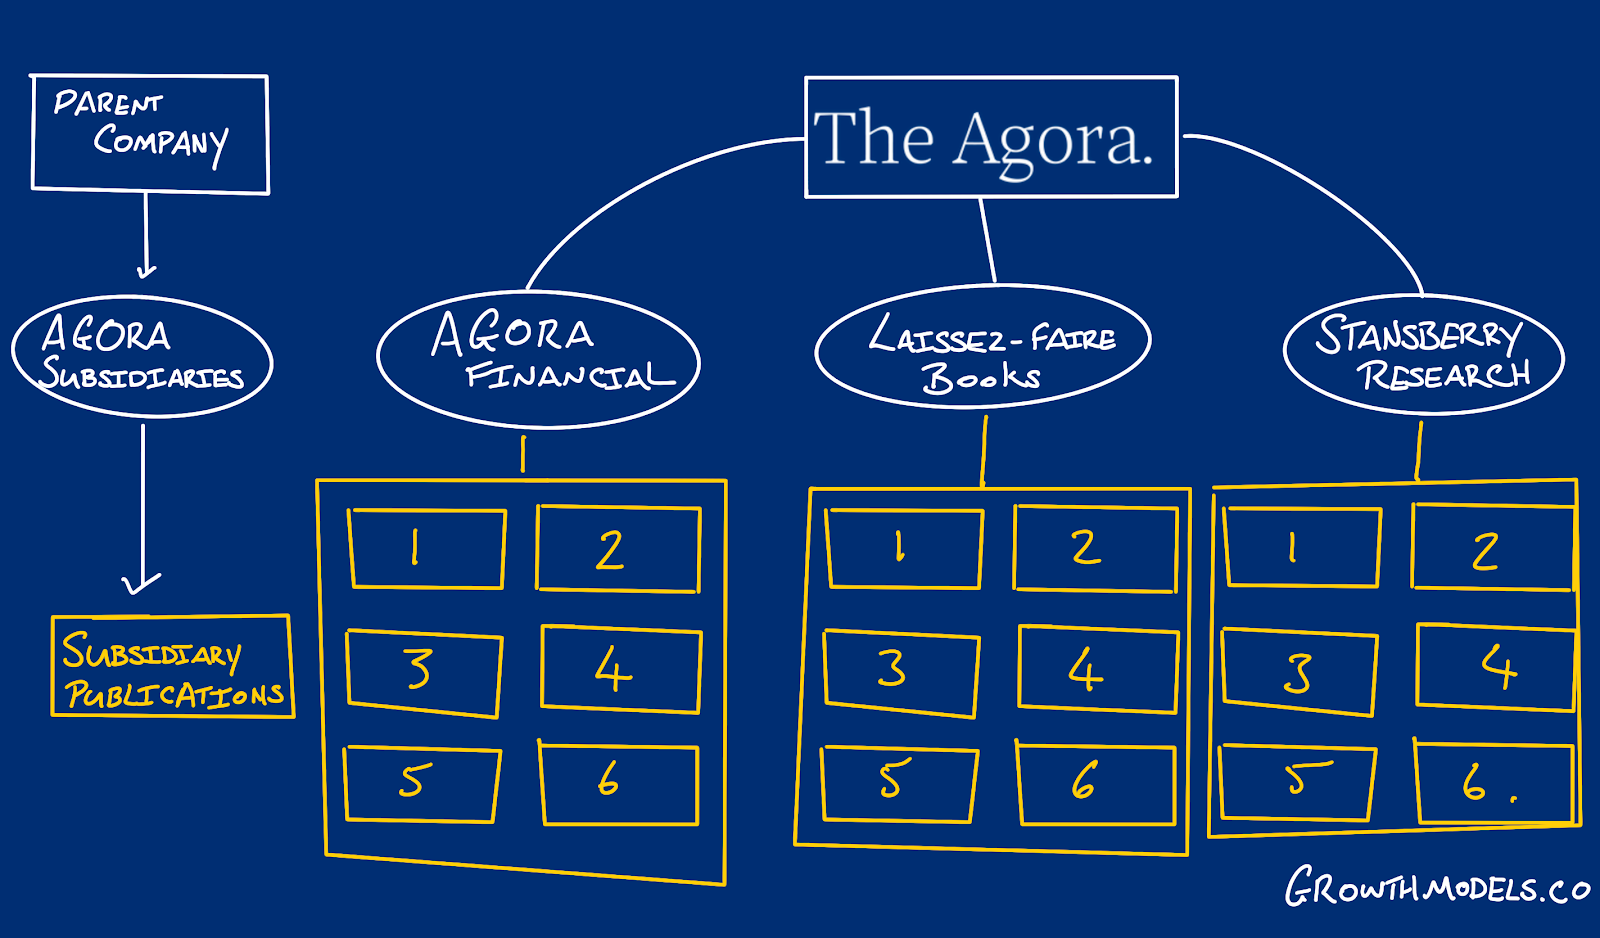 How The Agora organise their subsidiaries